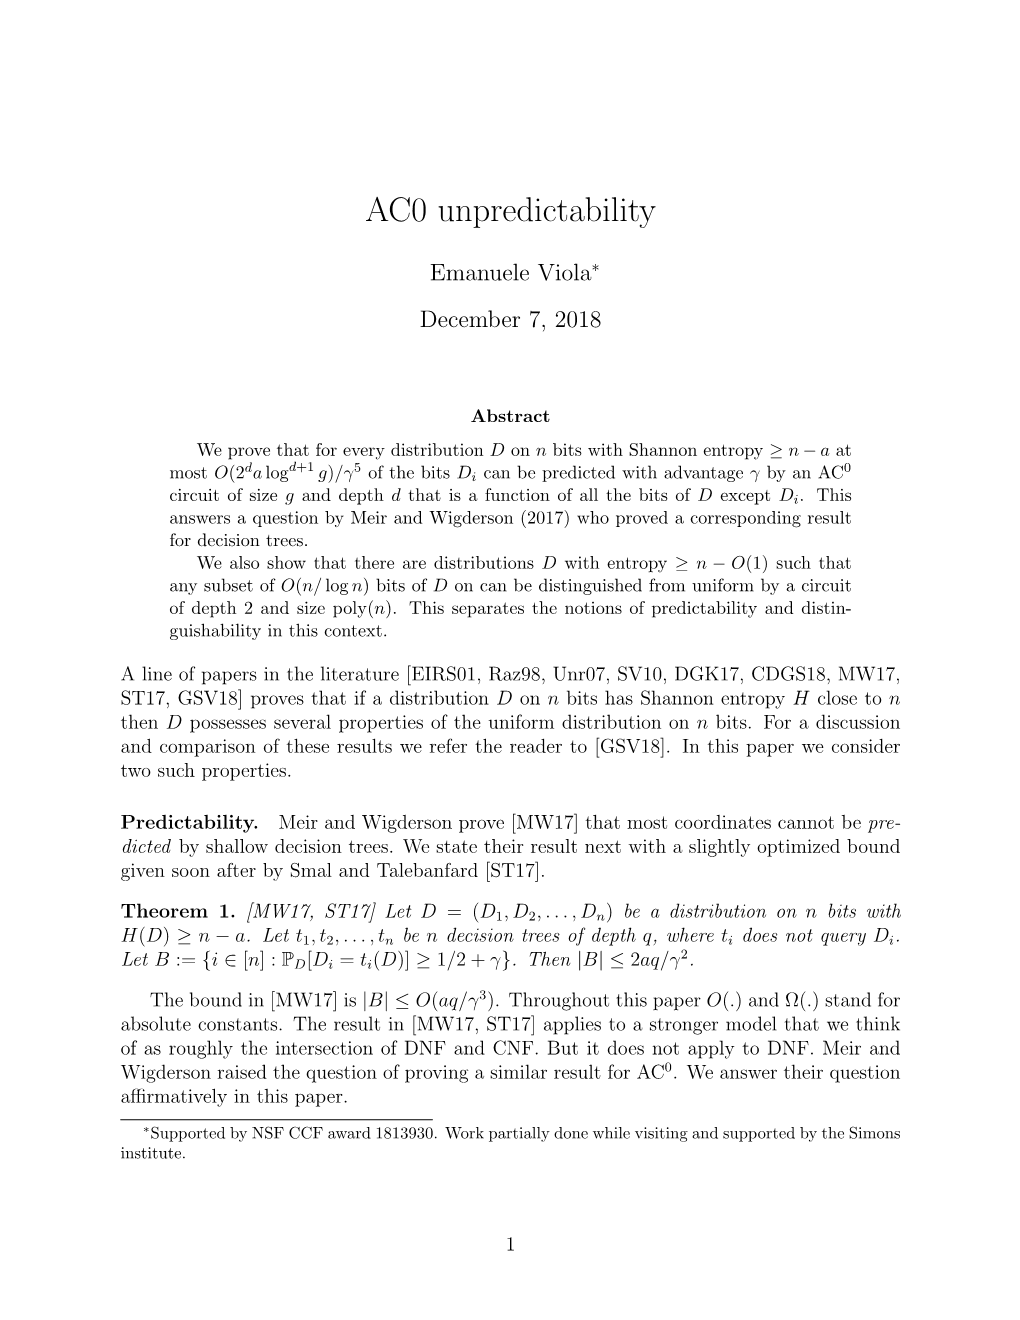 AC0 Unpredictability